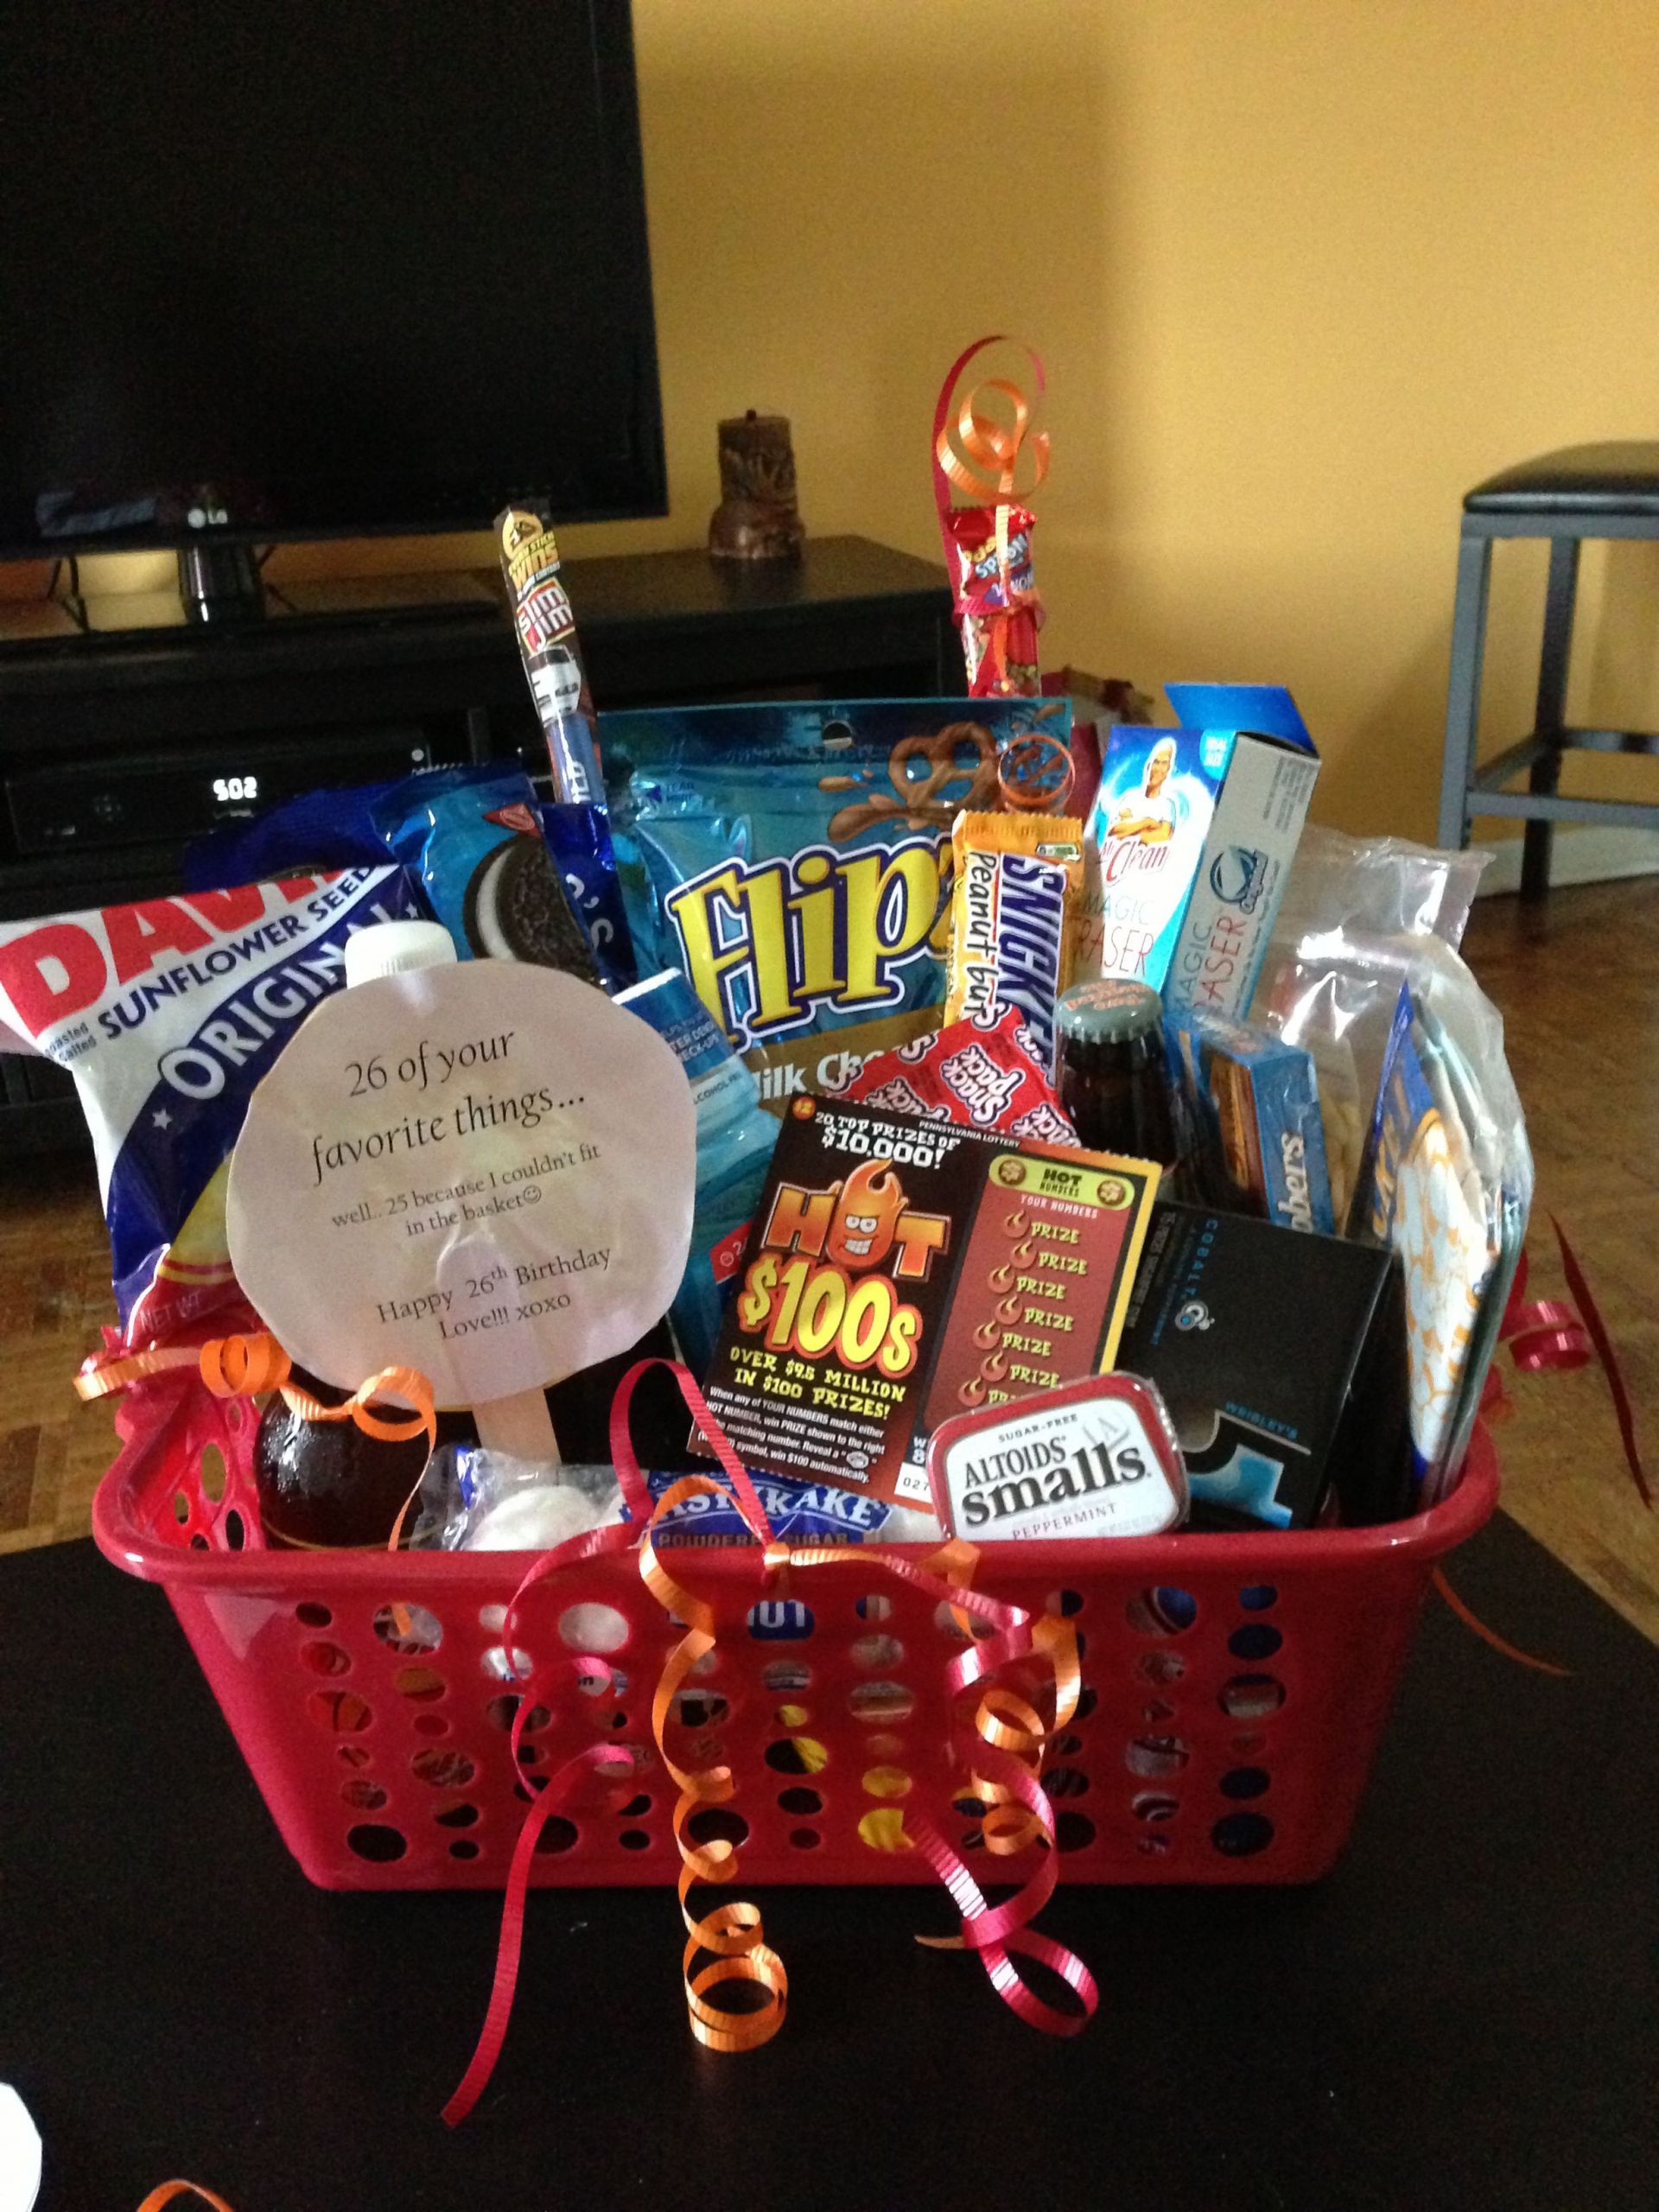 Fun Gift Ideas For Boyfriend
 Boyfriend birthday basket 26 of his favorite things for